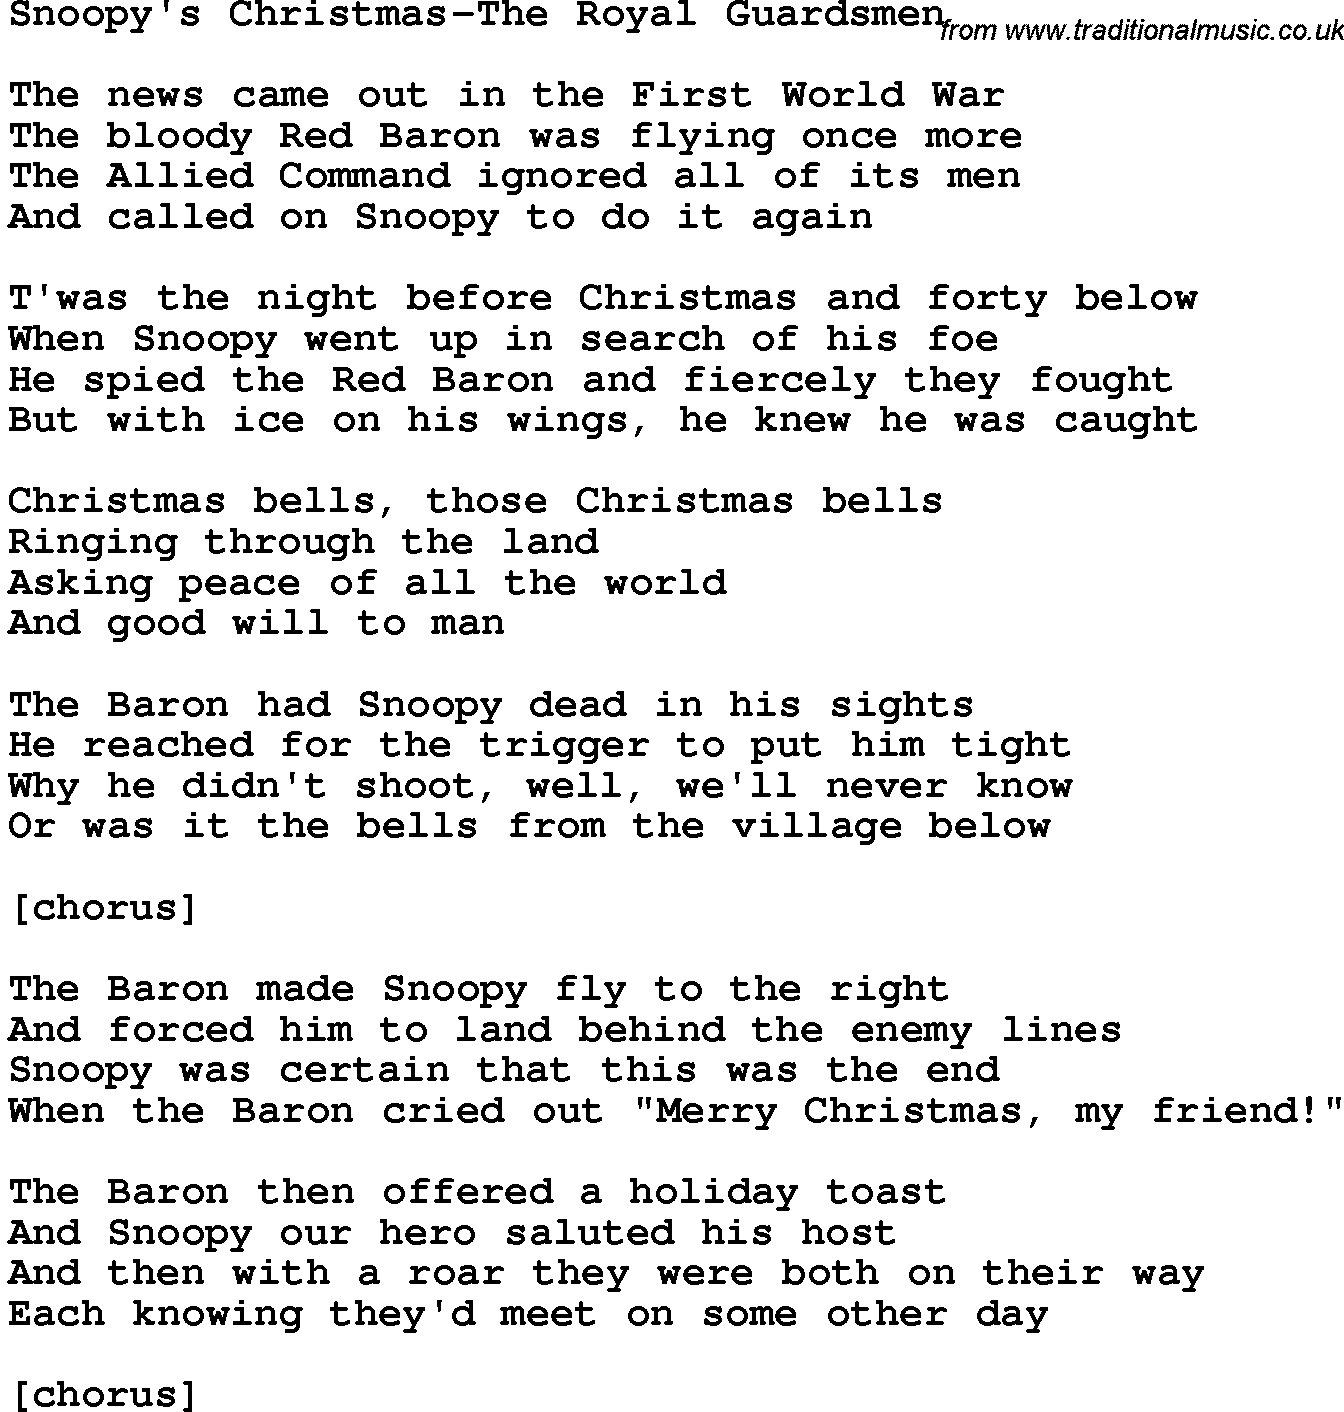 Novelty song: Snoopy's Christmas-The Royal Guardsmen lyrics